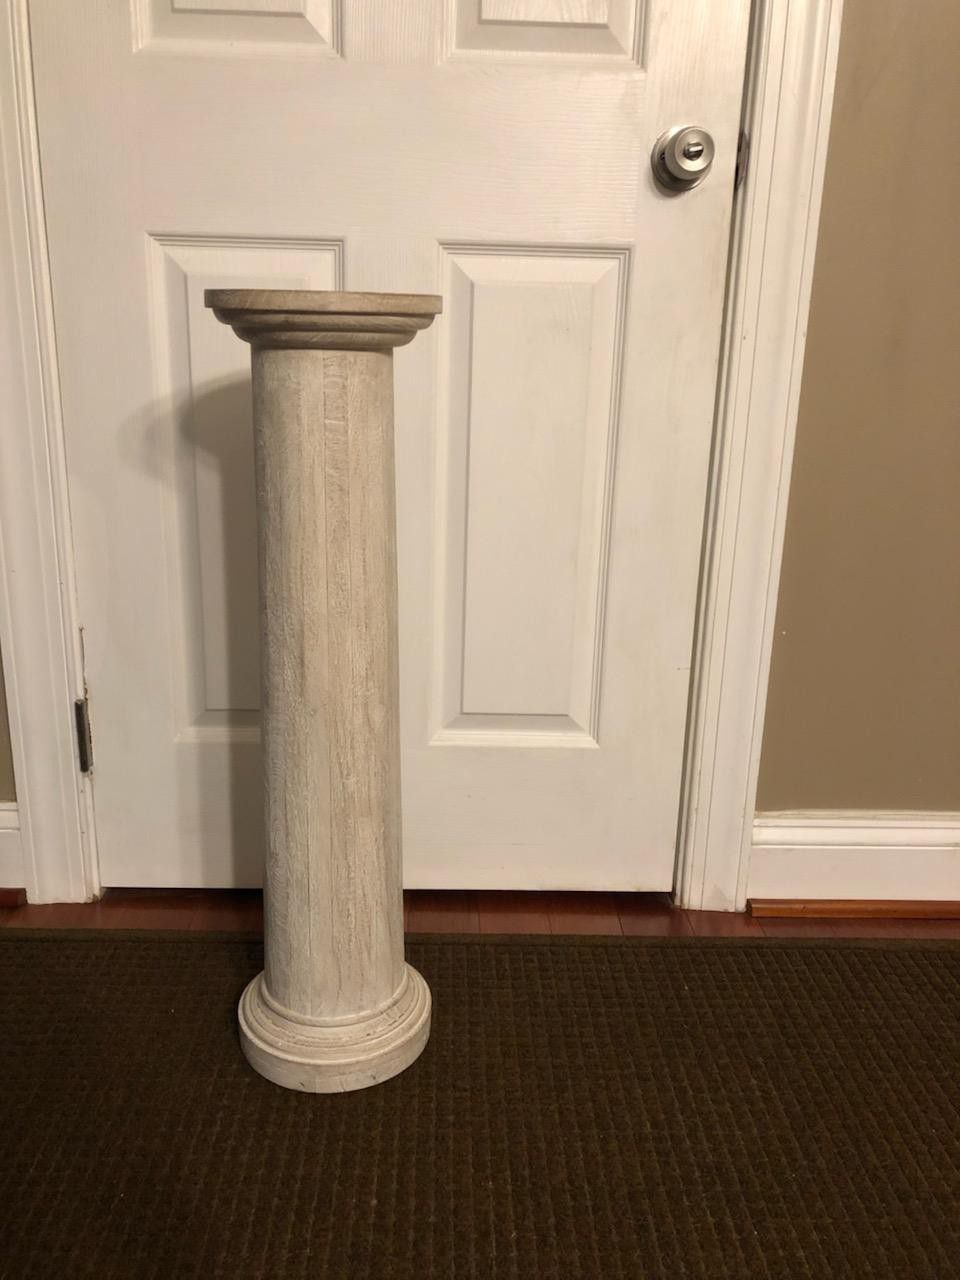 Decorative pillar or pedestal